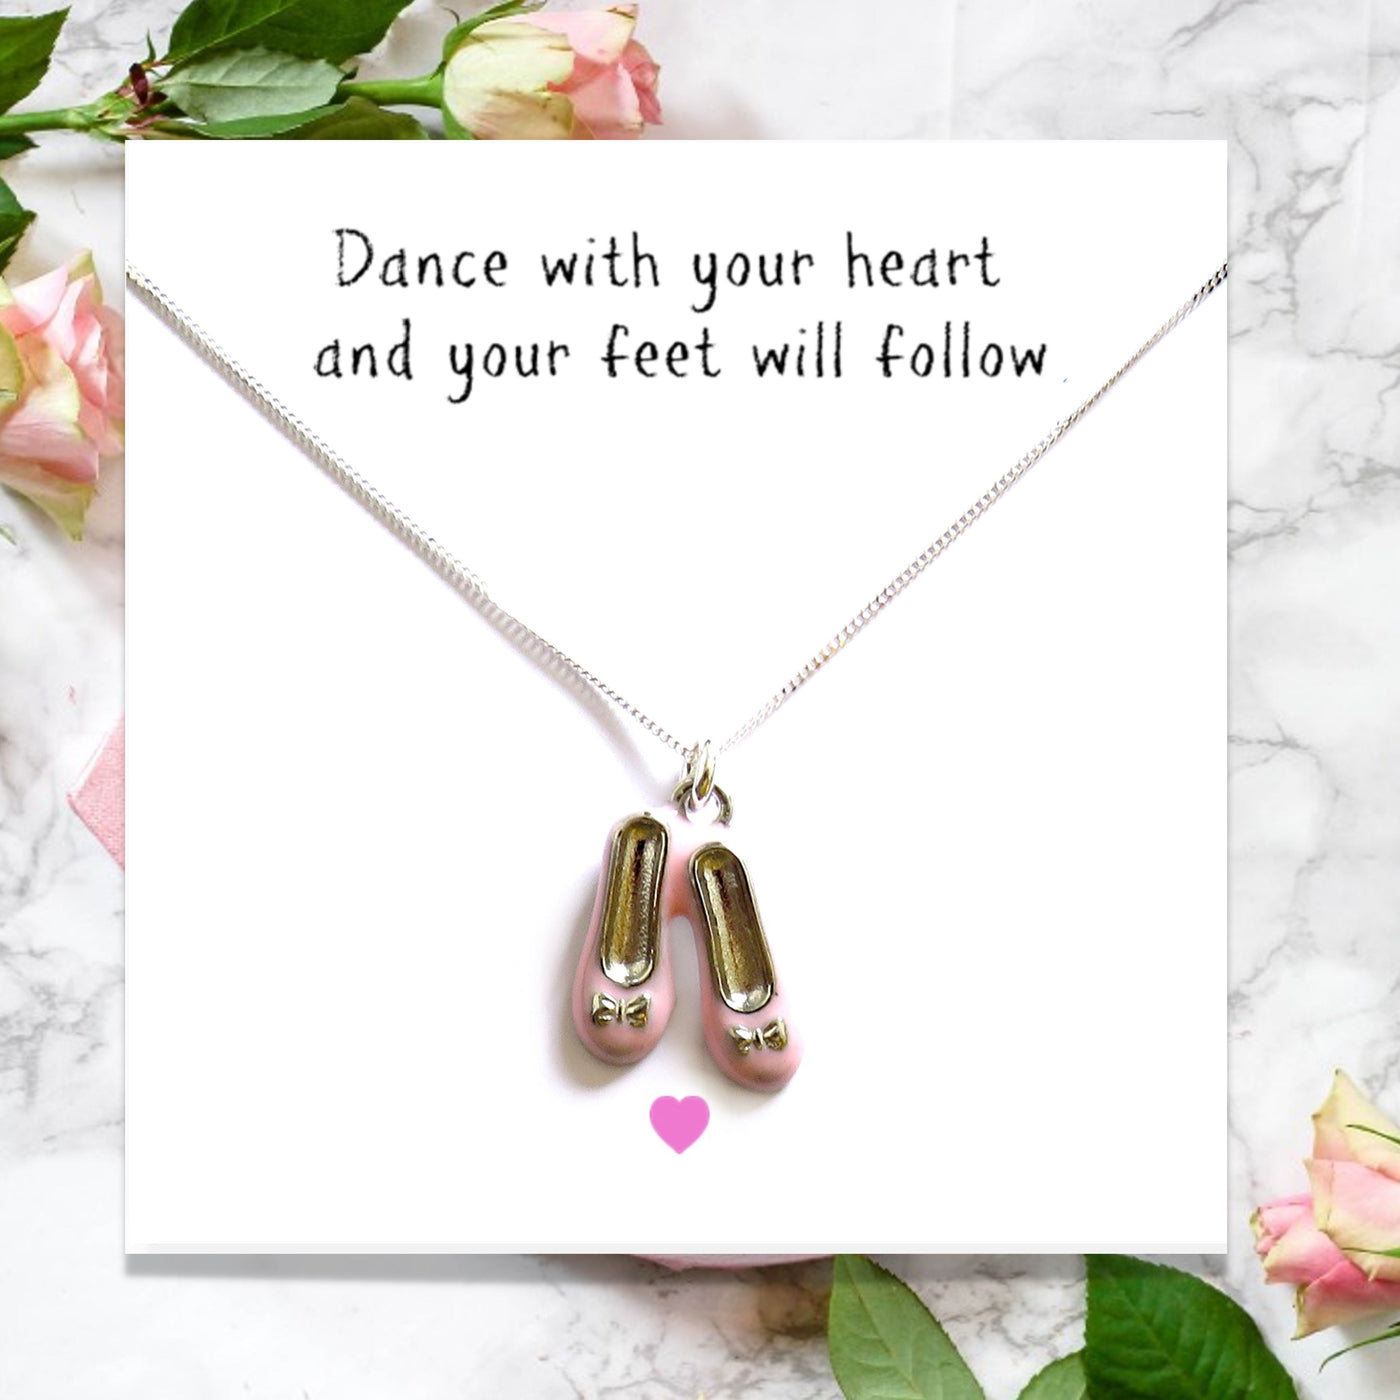 Ballet Shoes Necklace & Message Card